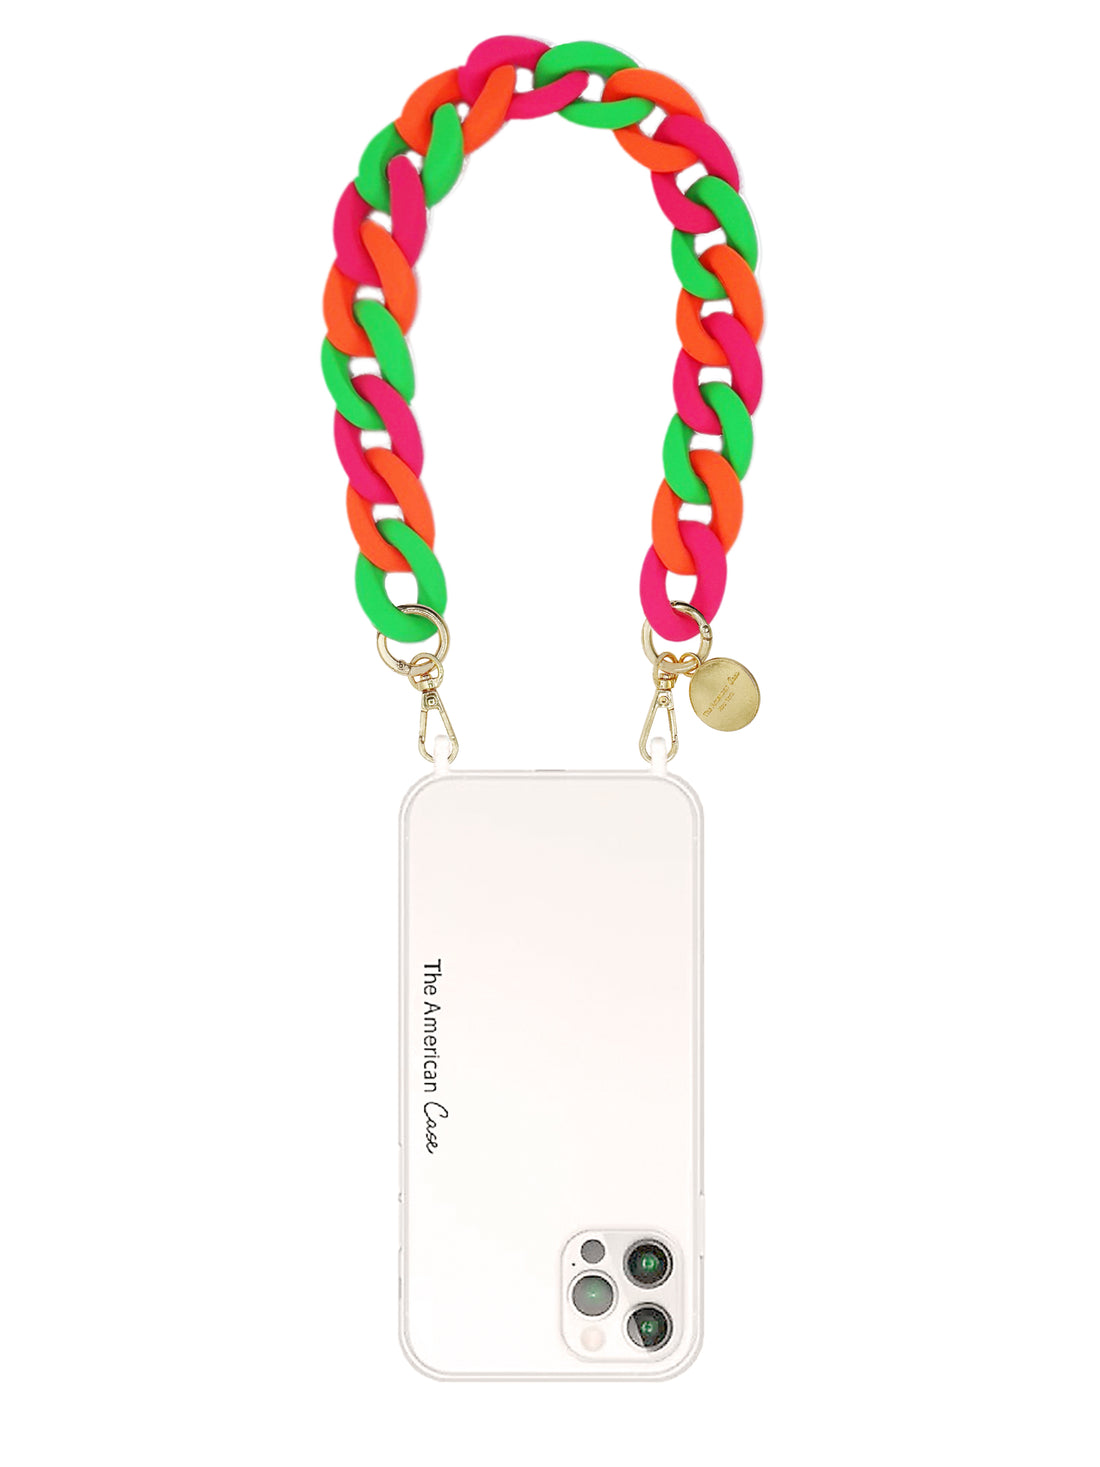 Magnolia - Colored Matt Resin Bracelet Phone Chain with Golden Carabiners